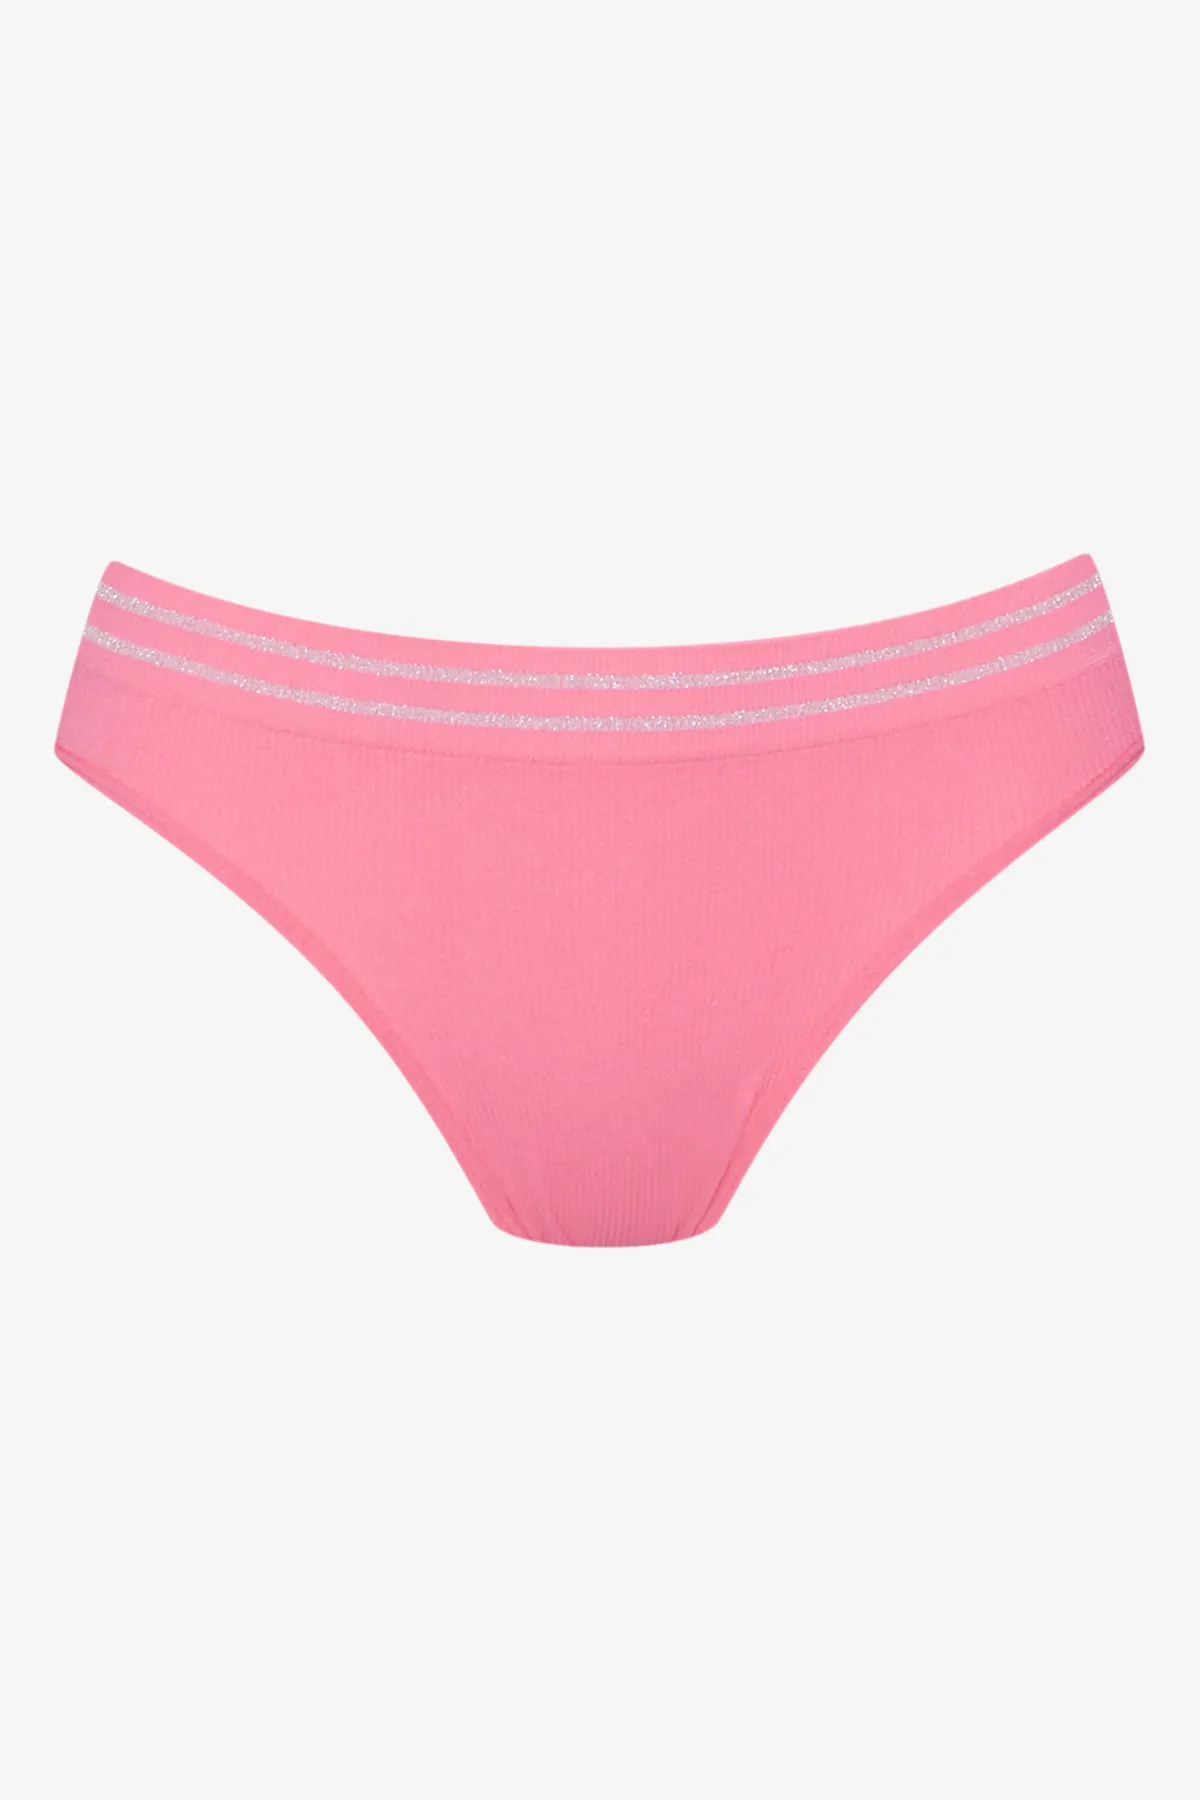 Intimates & Sleepwear, Womens 7 Day Of The Week Underwear Multicolored Panties  Underwear Briefs